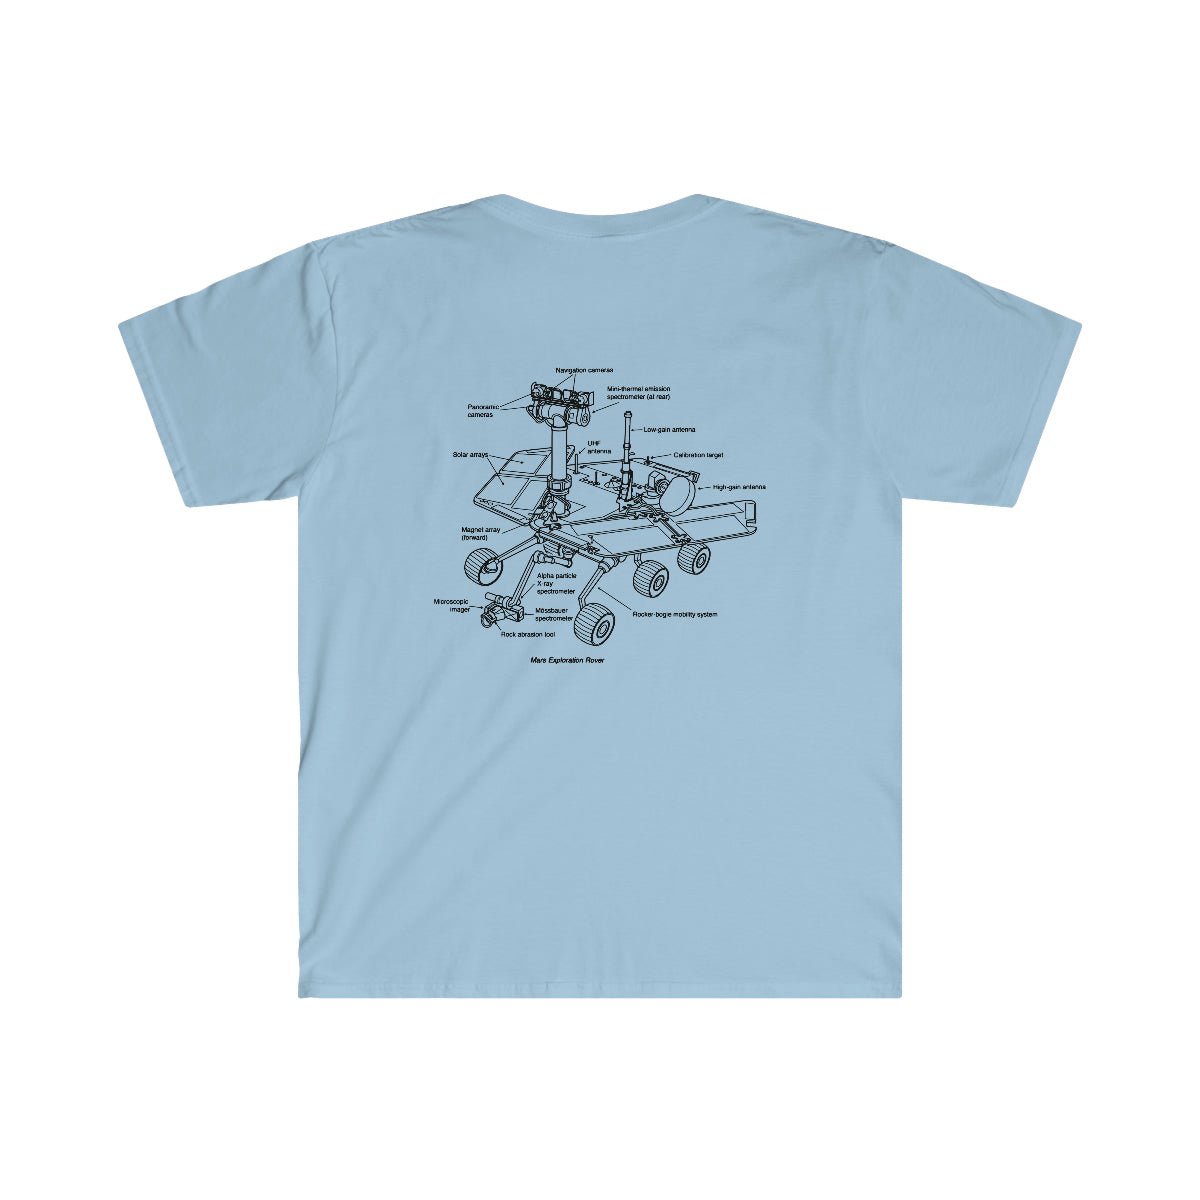 Mars Exploration Robot T-Shirt